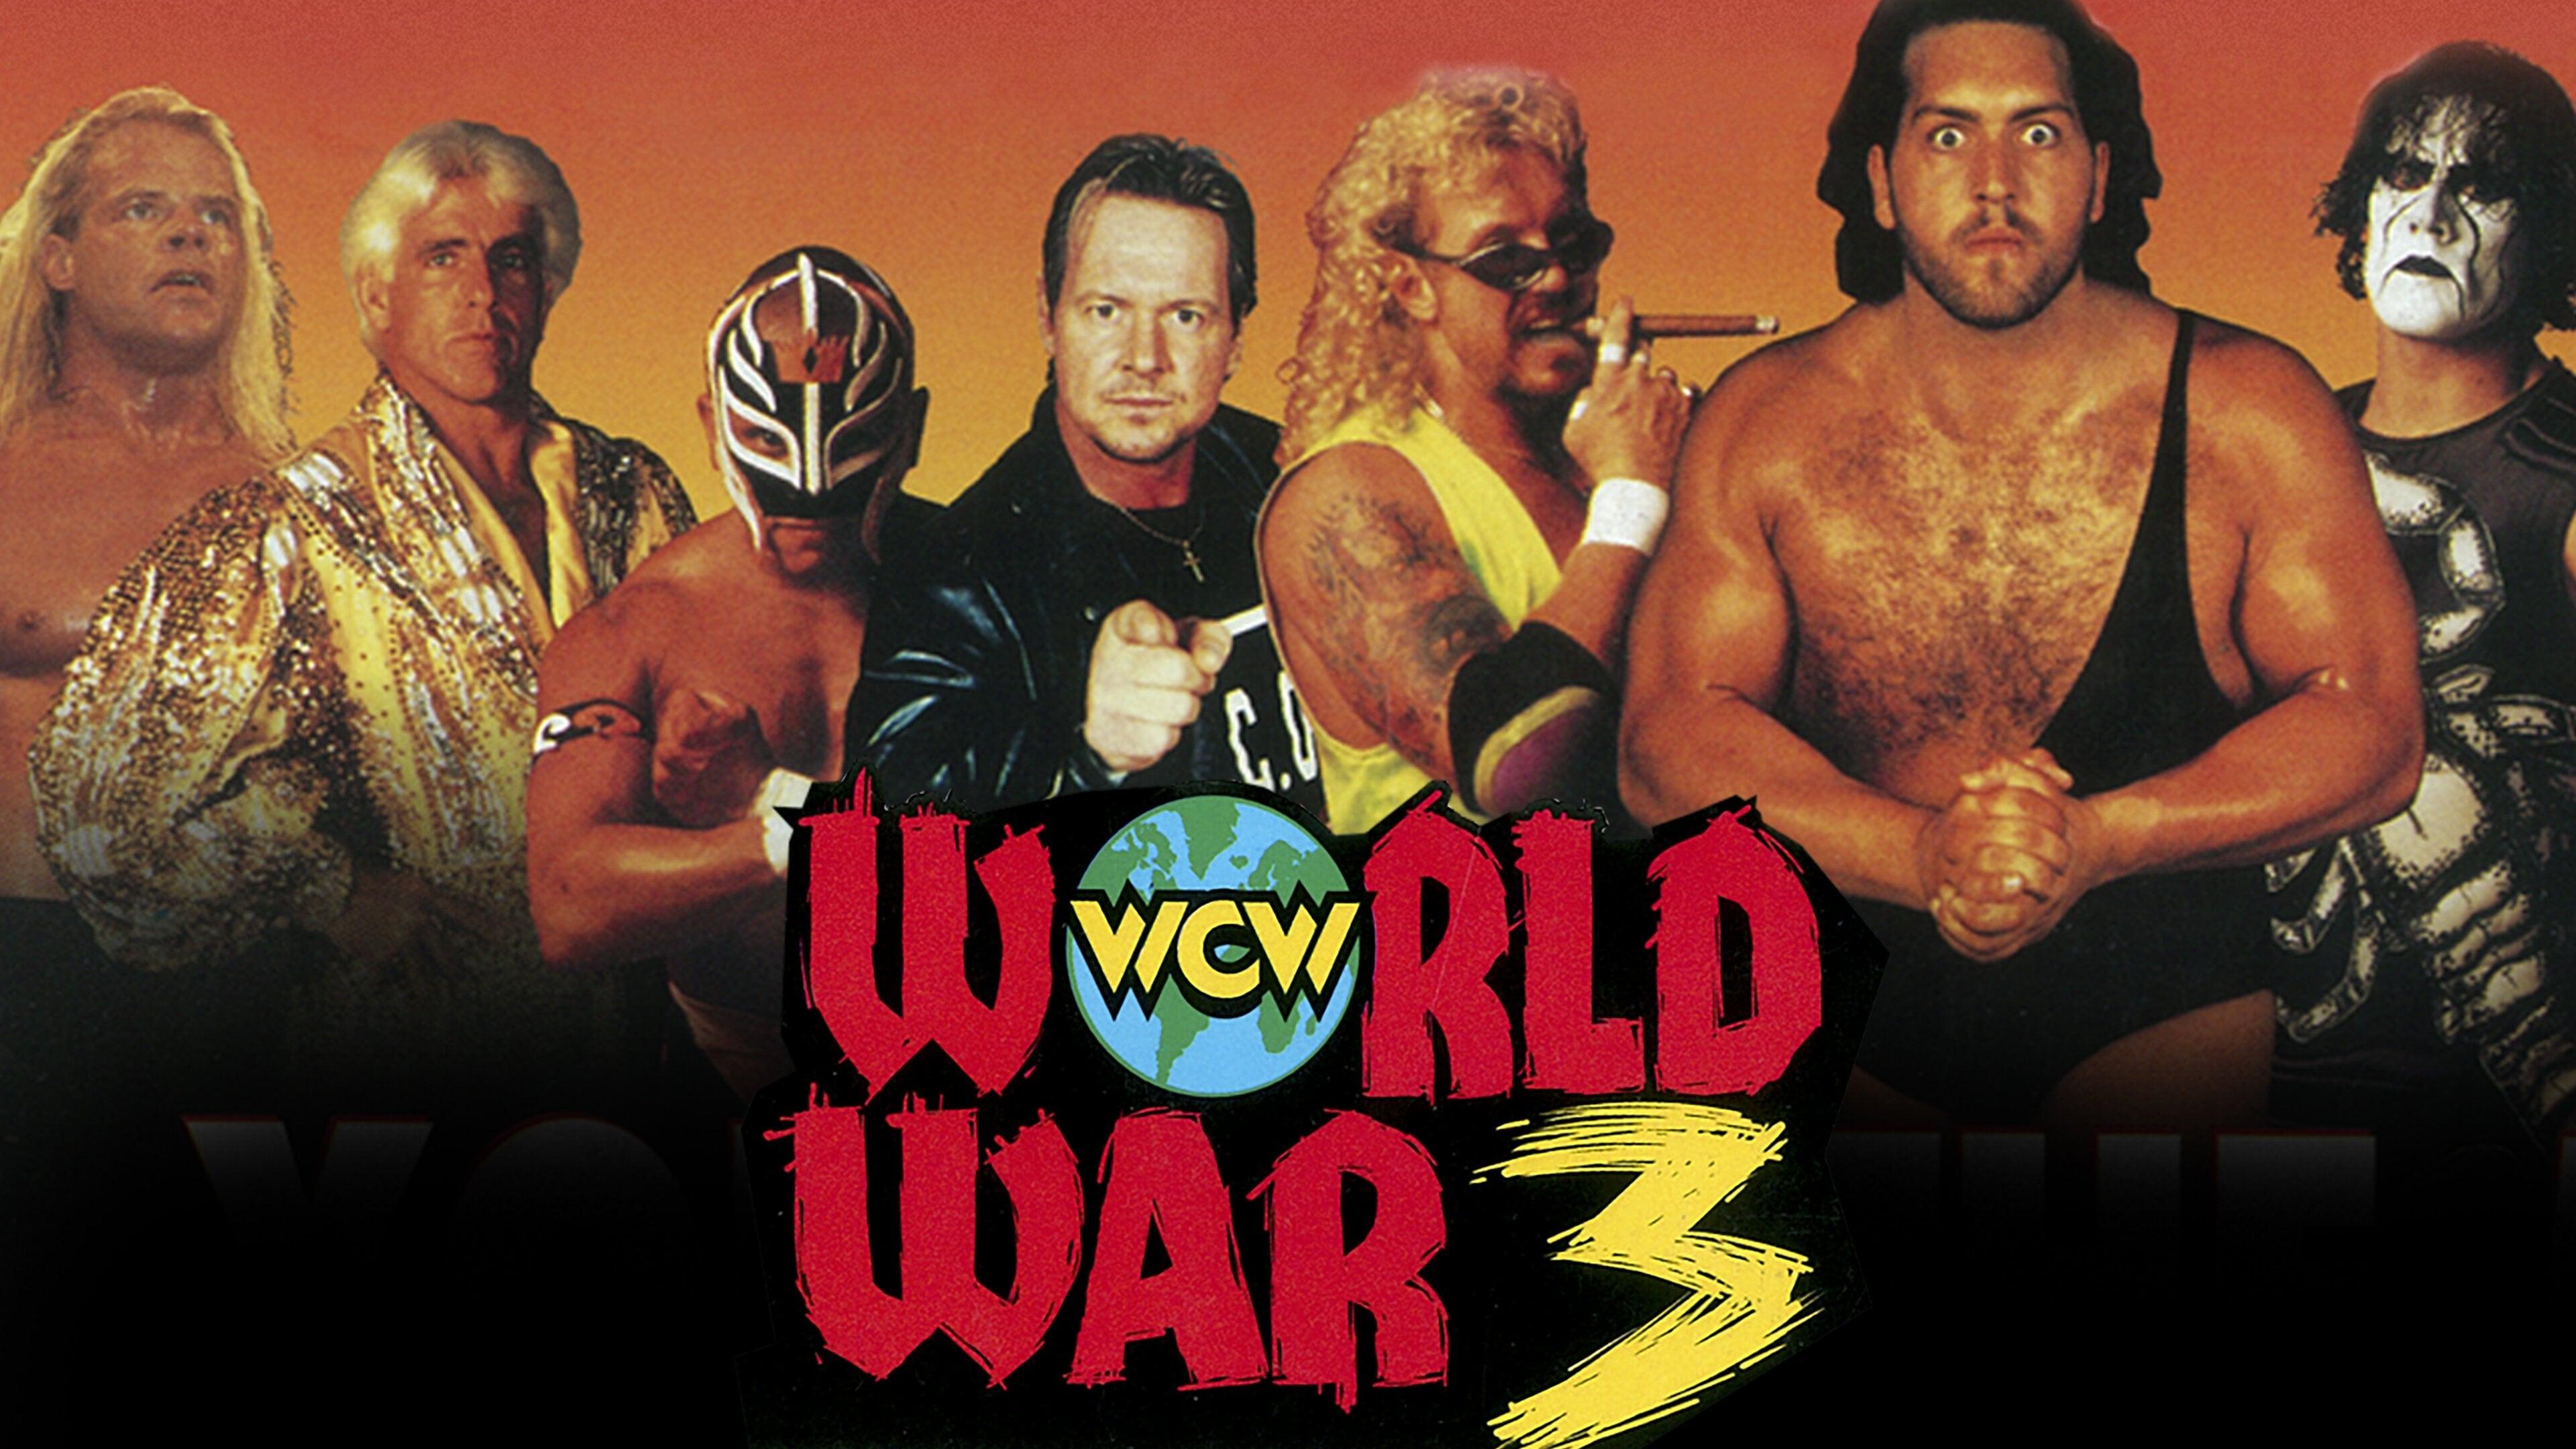 WCW World War 3 1997 backdrop